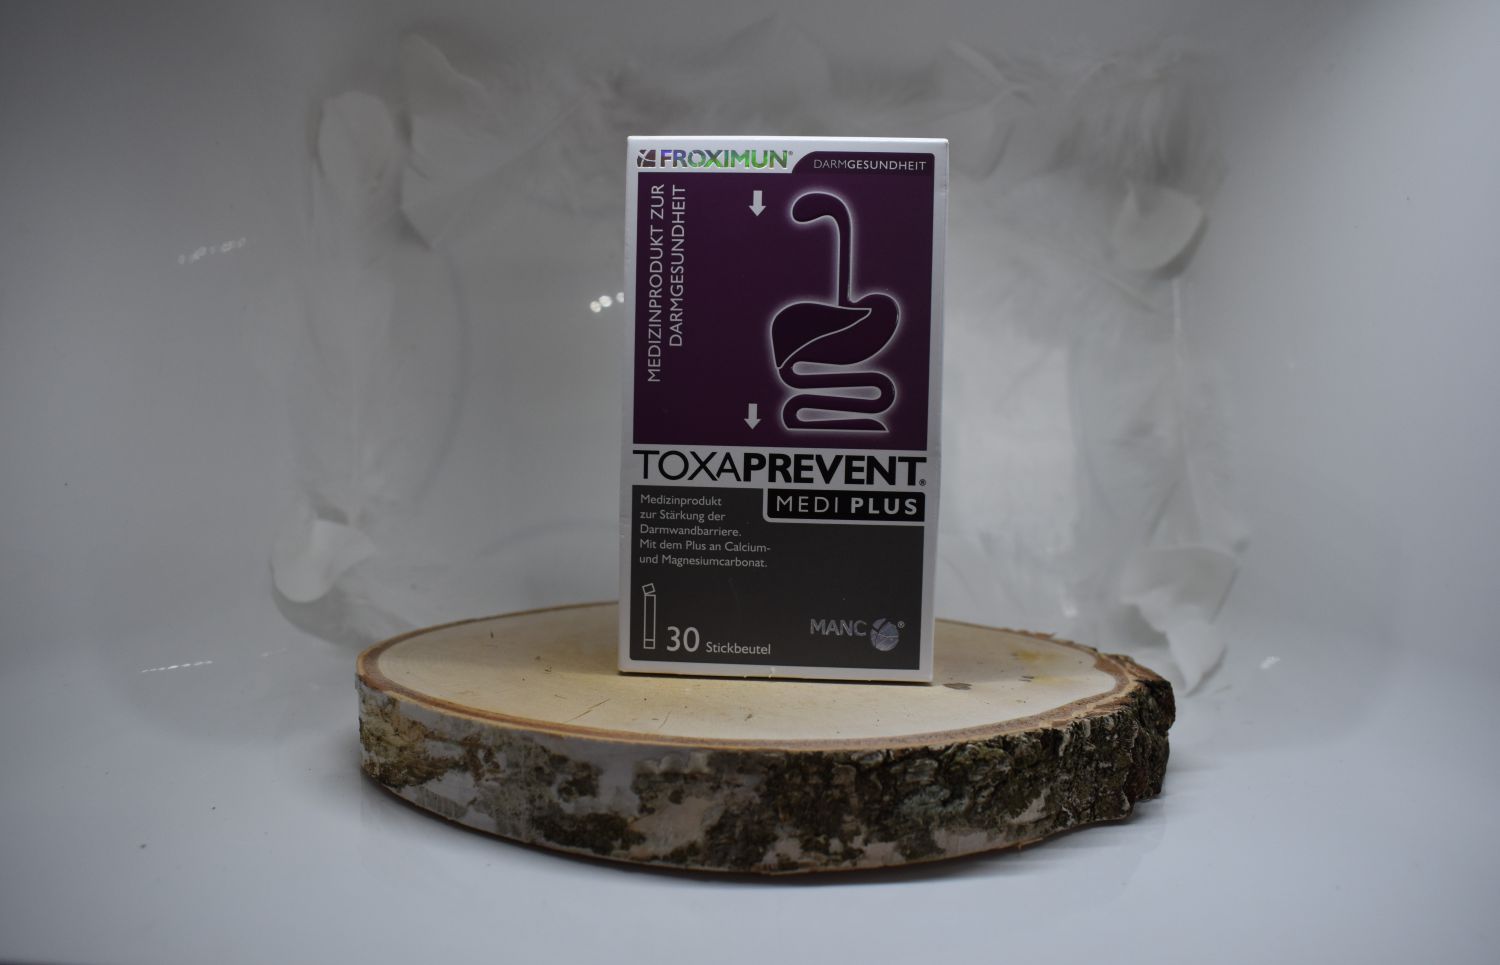 Toxaprevent detox- middel